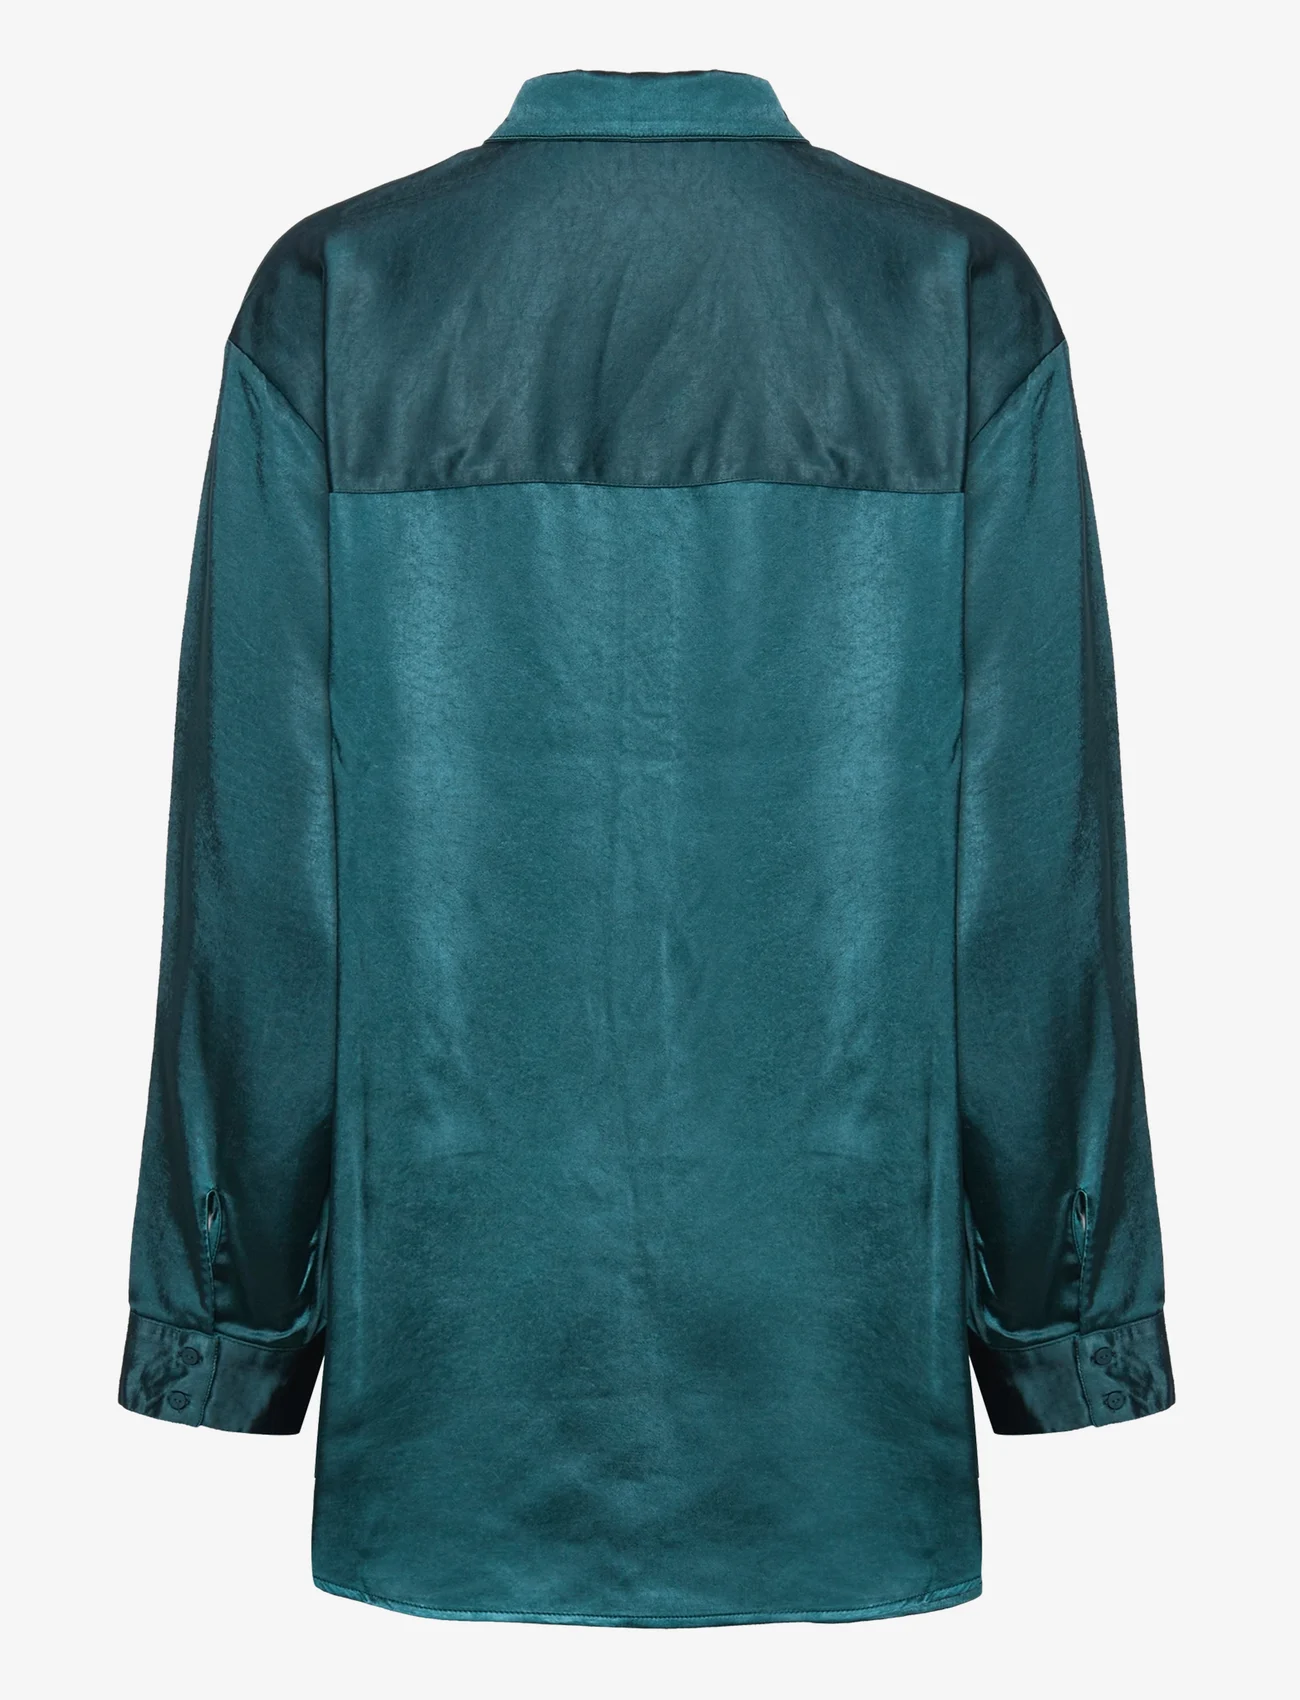 bzr - Satina Utillas shirt - langærmede skjorter - teal green - 1